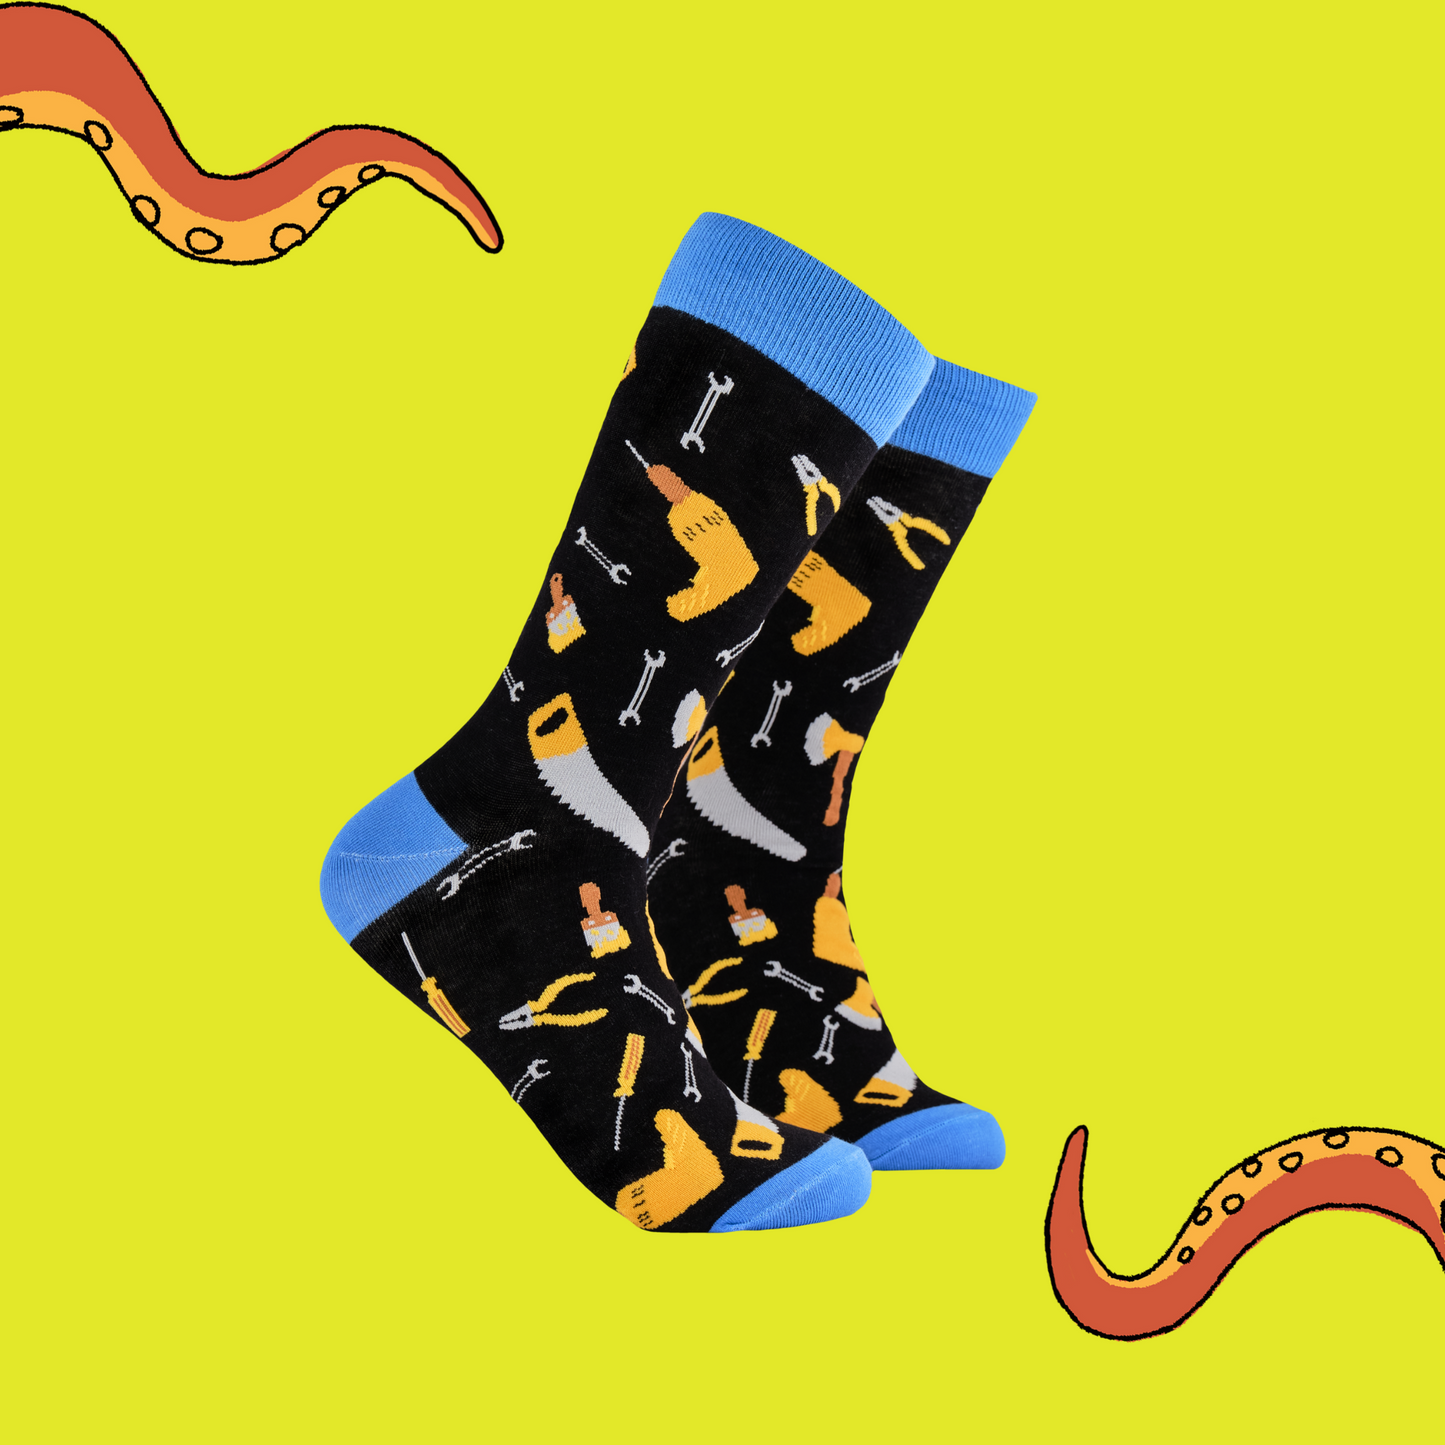 A pair of socks depicting DIY tools. Black legs, blue cuff, heel and toe.